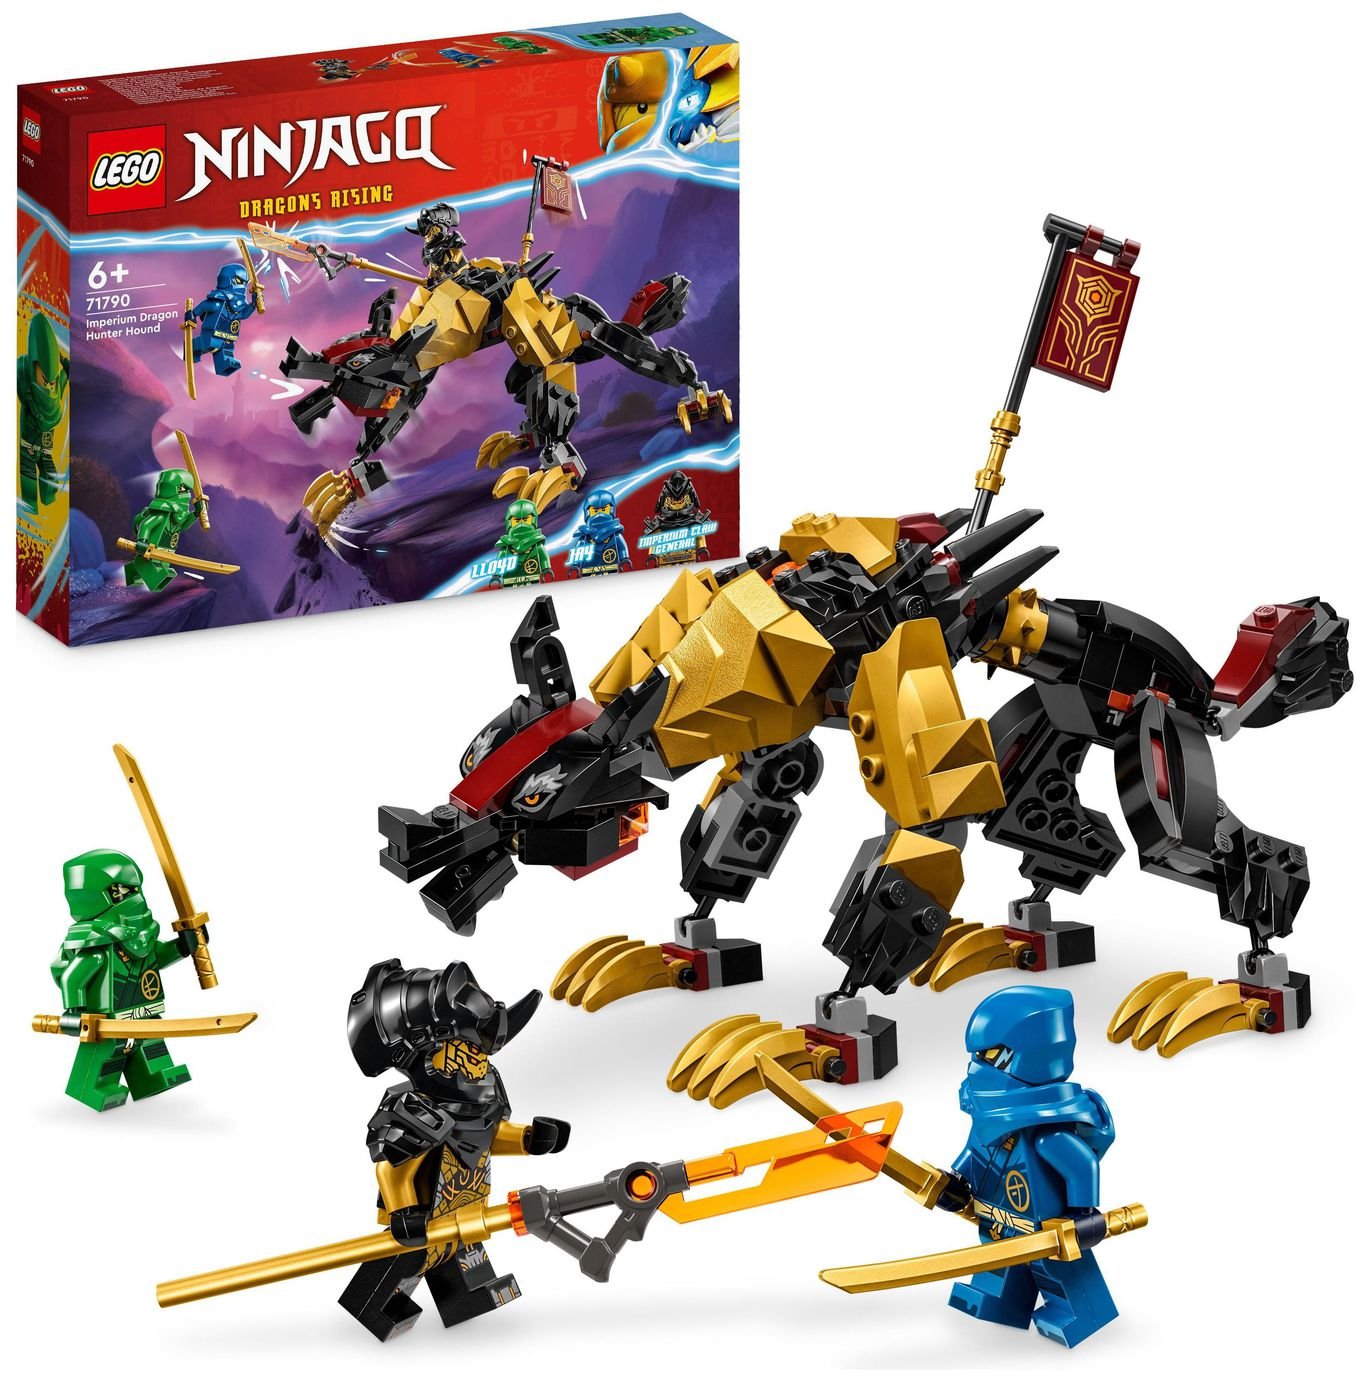 LEGO NINJAGO Imperium Dragon Hunter Hound Ninja Set 71790